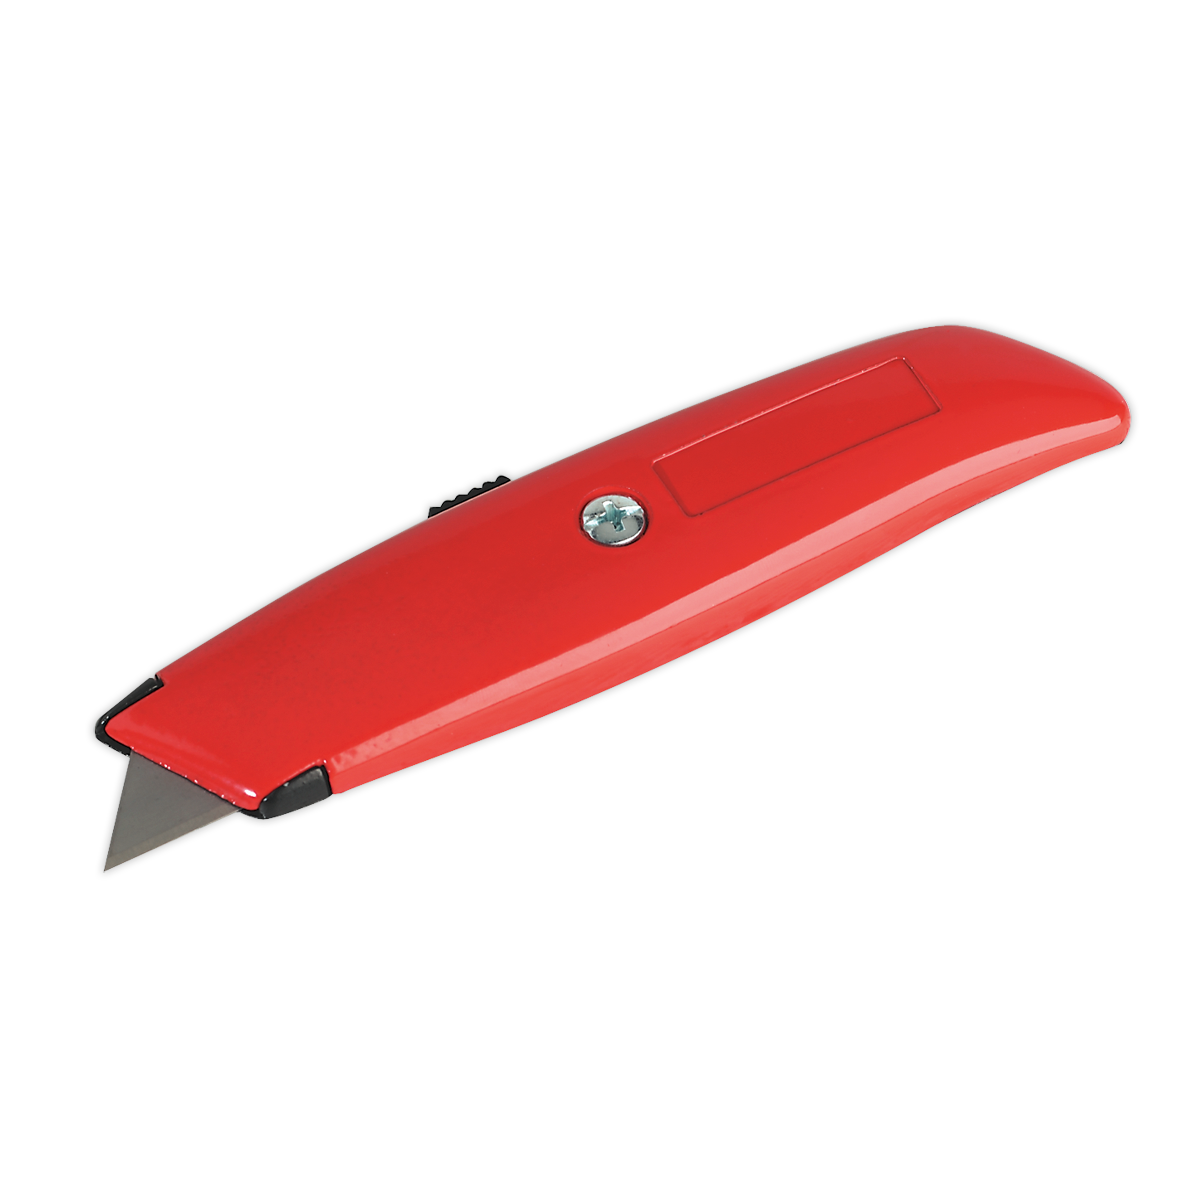 Sealey Retractable Utility Knife AK86